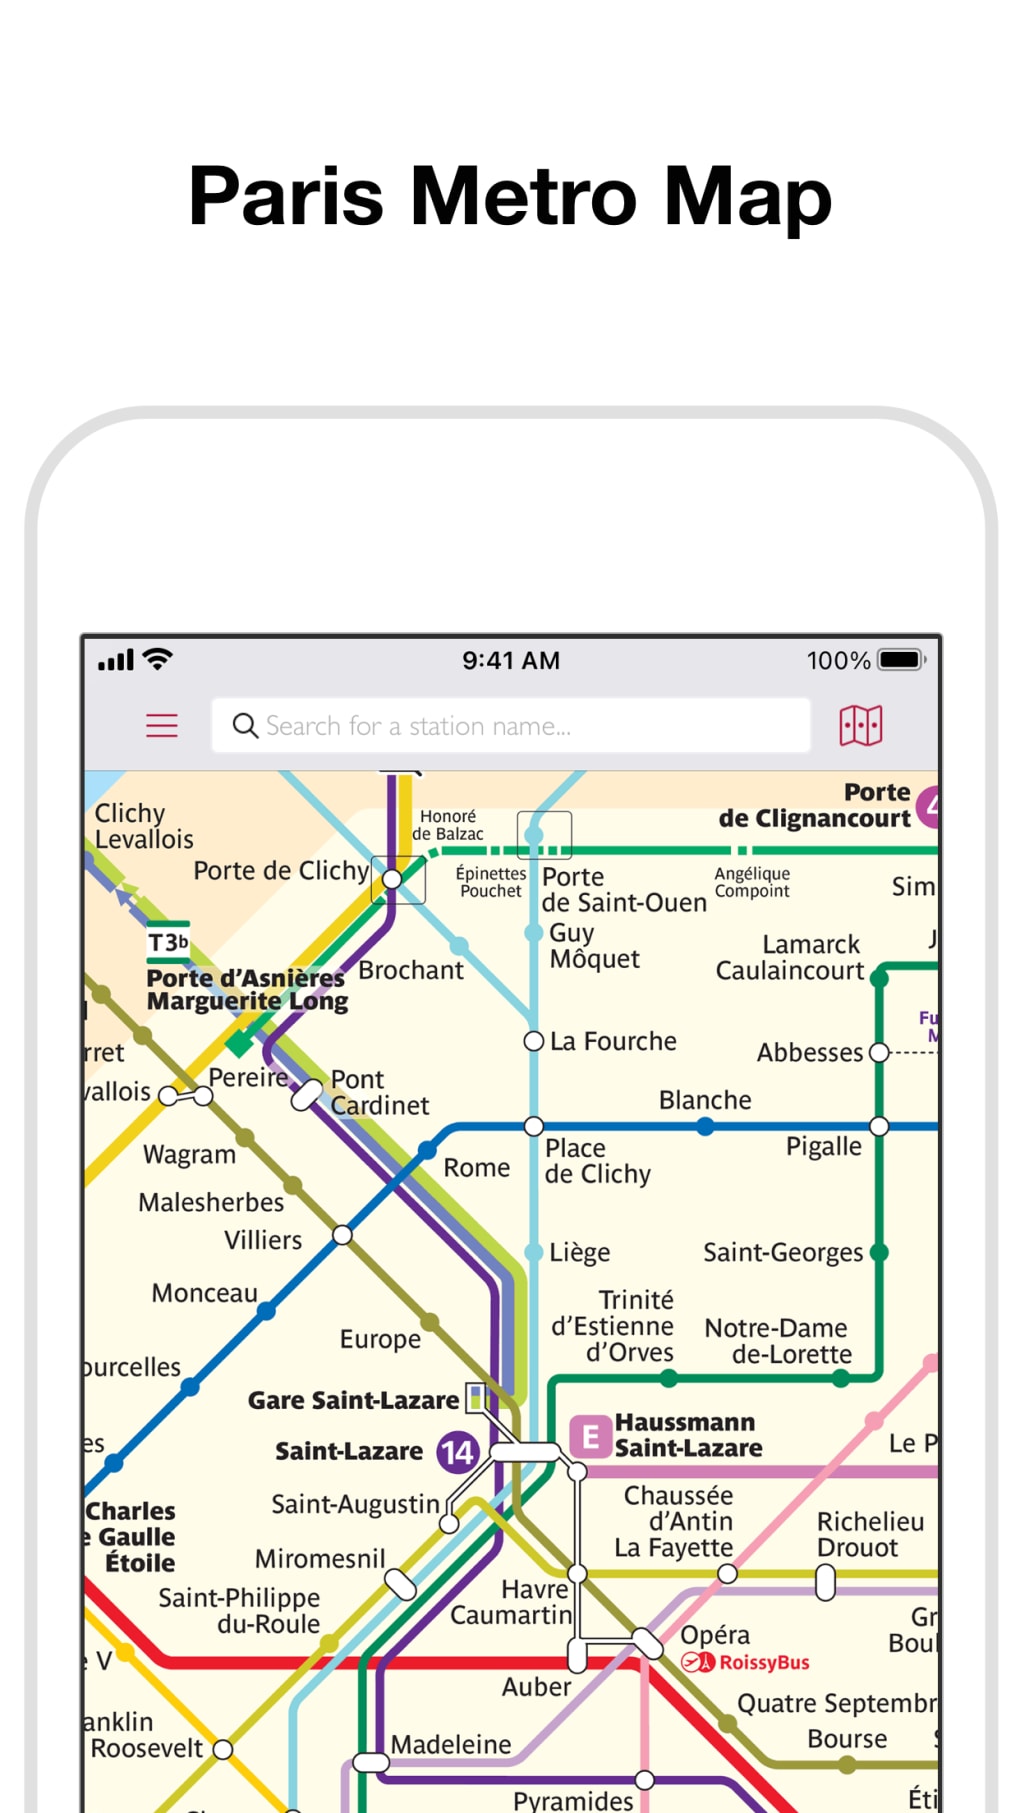 visit paris by metro app download